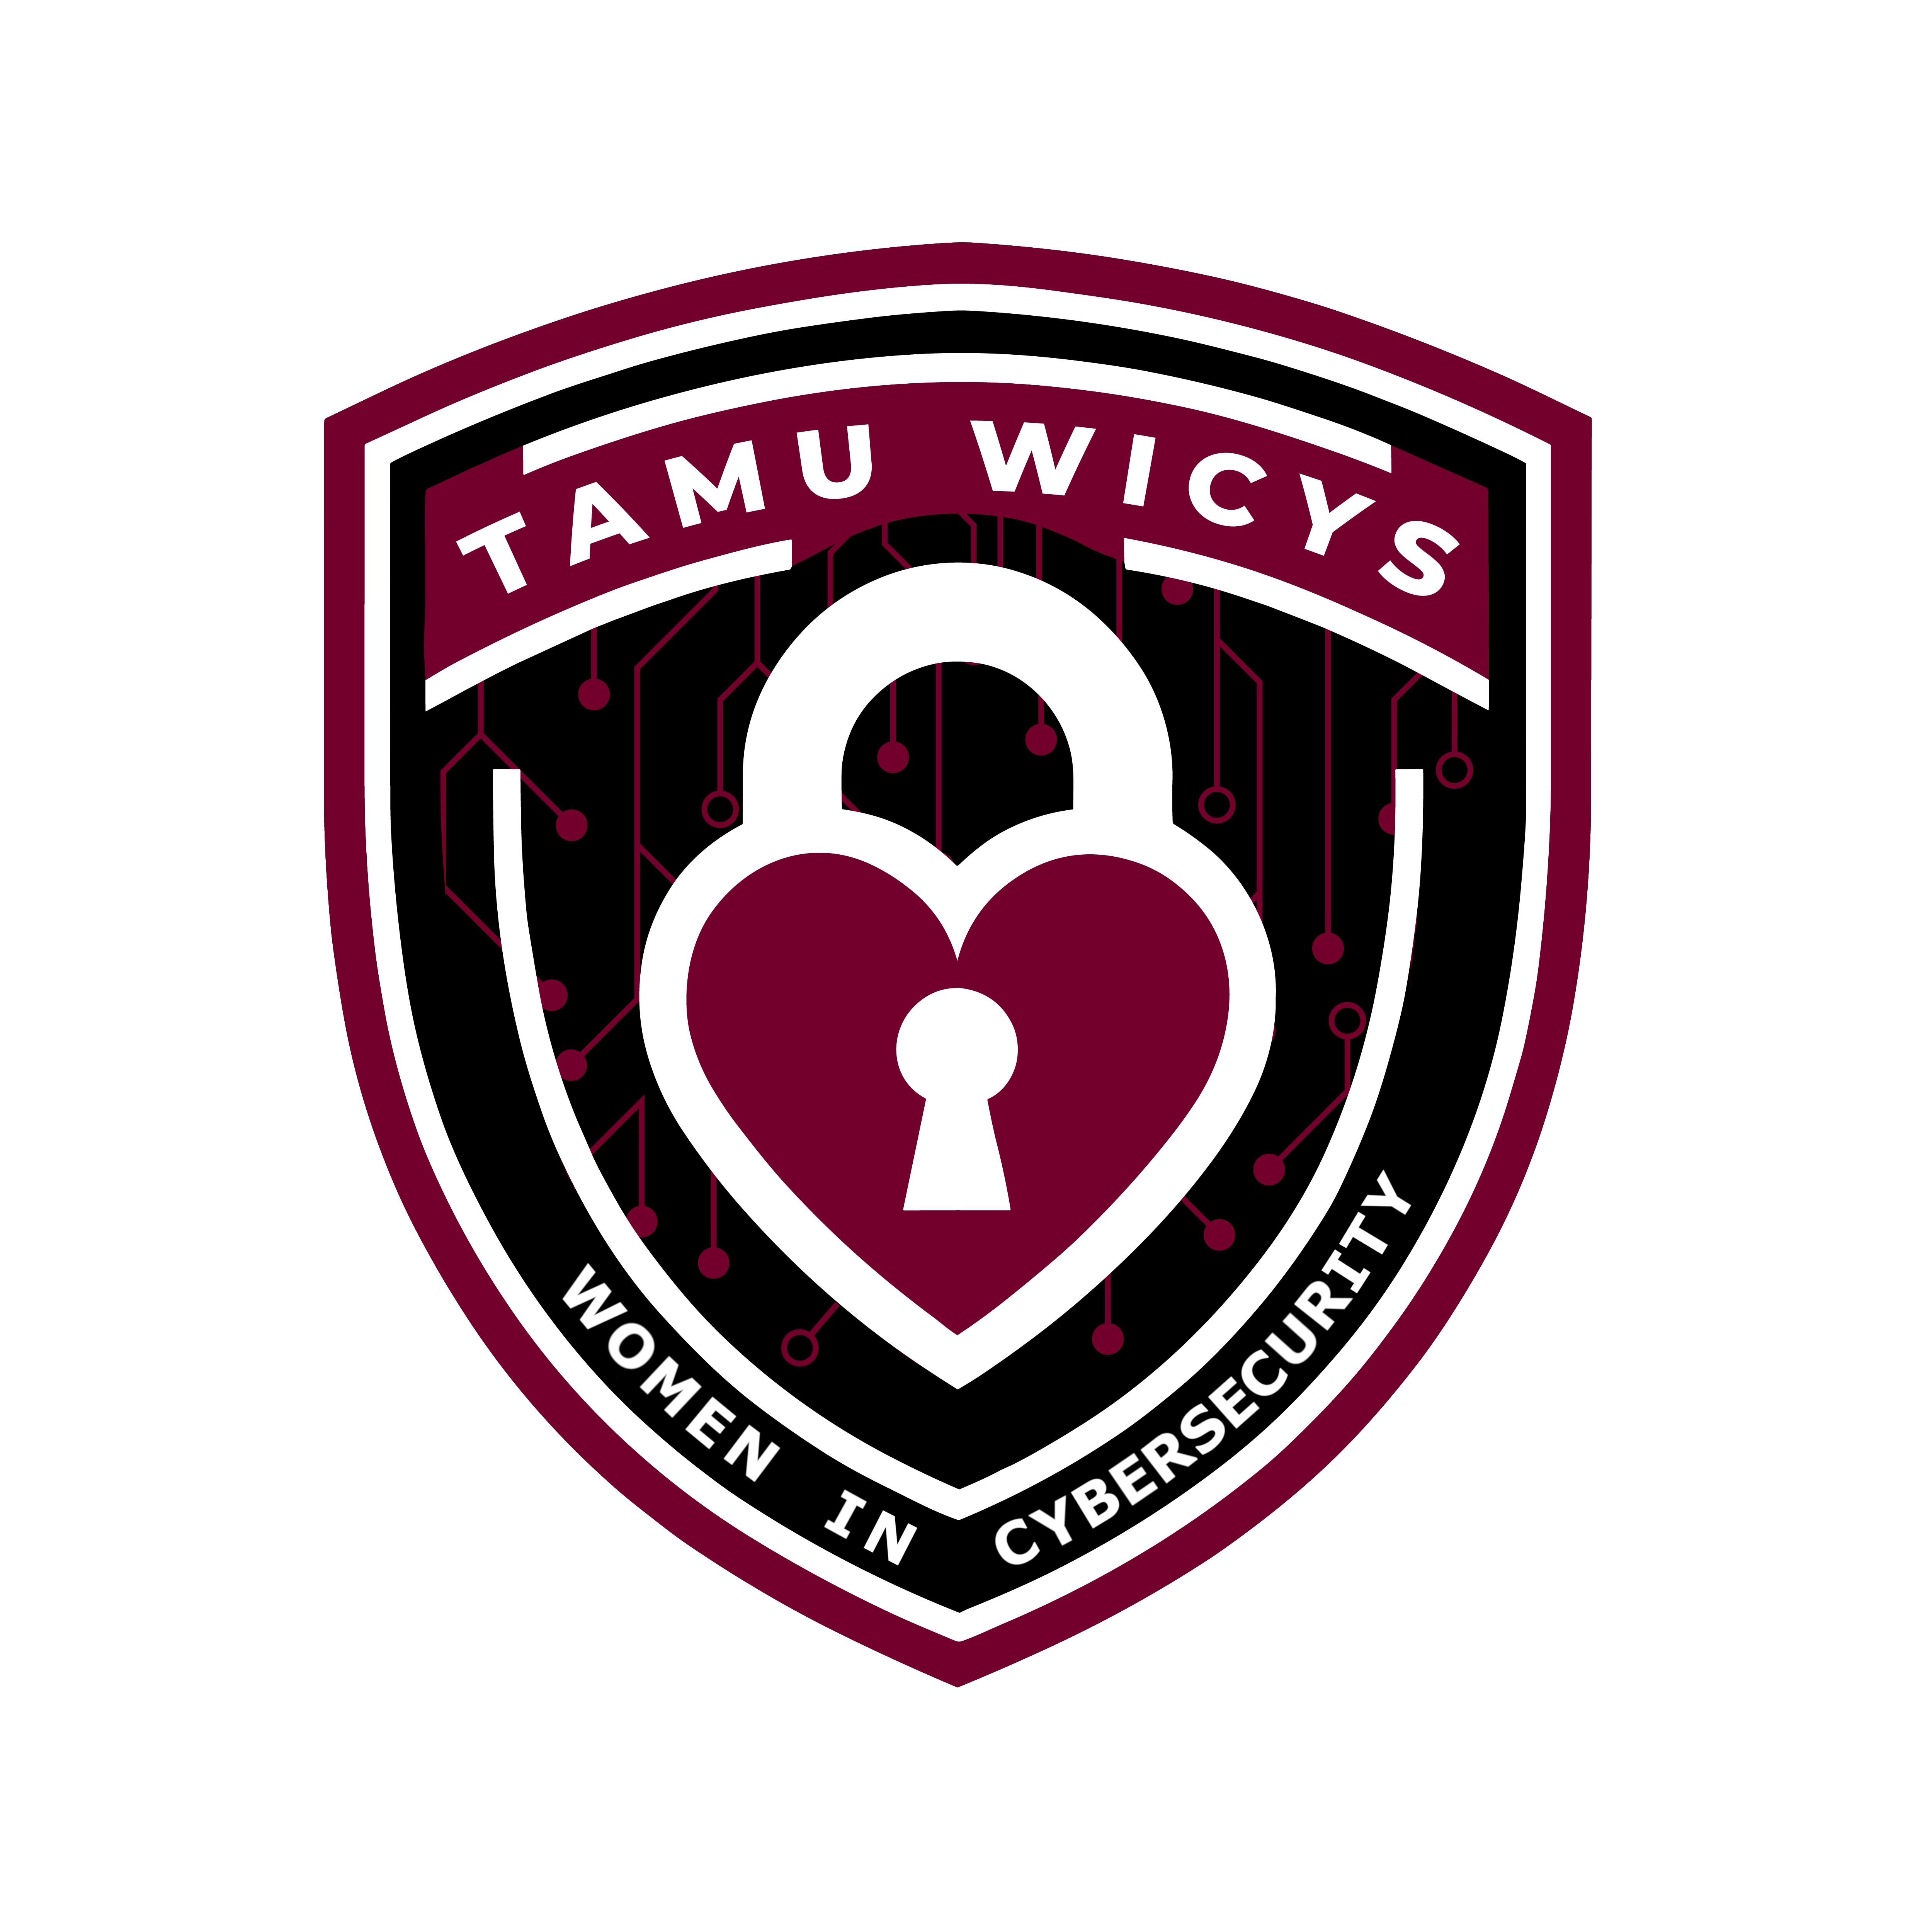 tamu-wicys logo